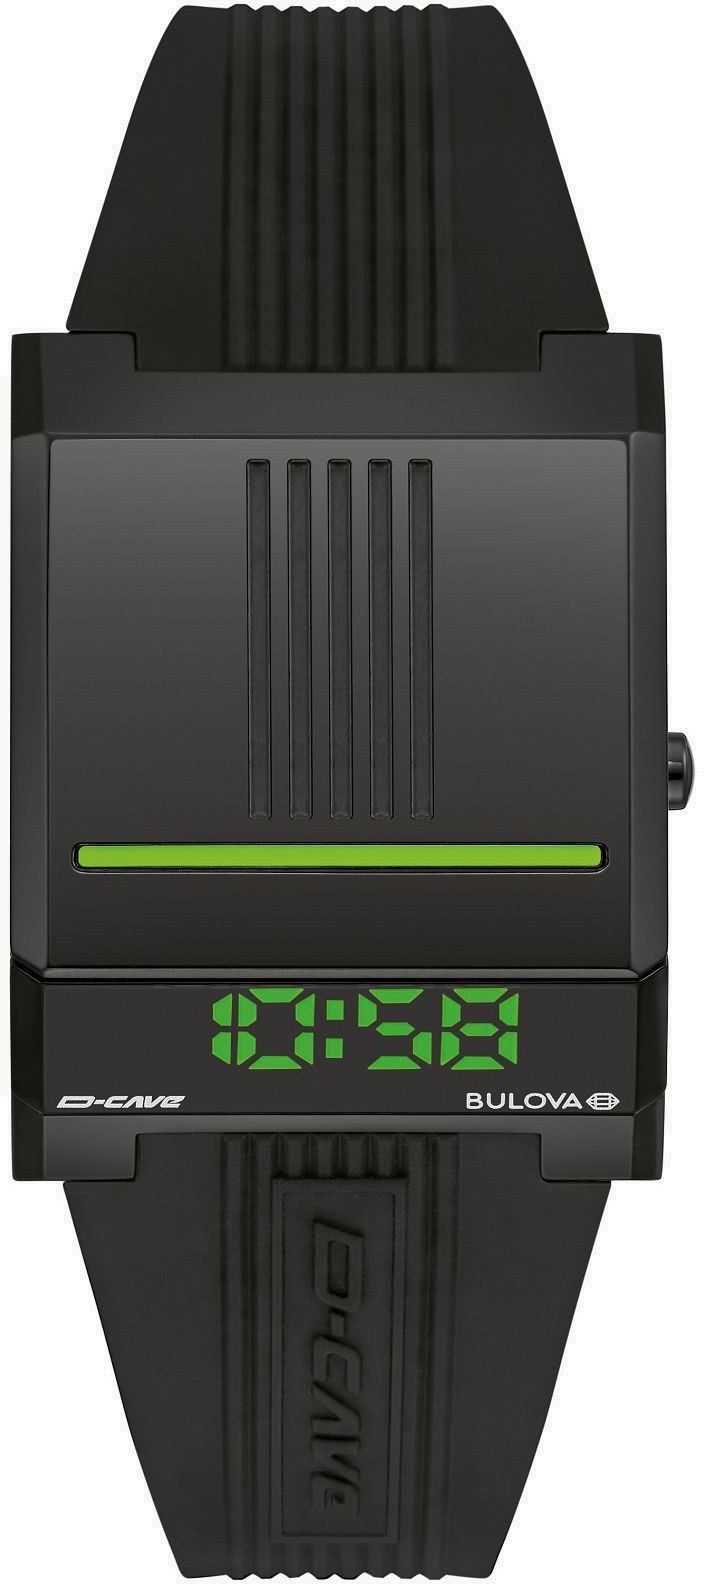 Bulova Computron D-CAVE 98c141